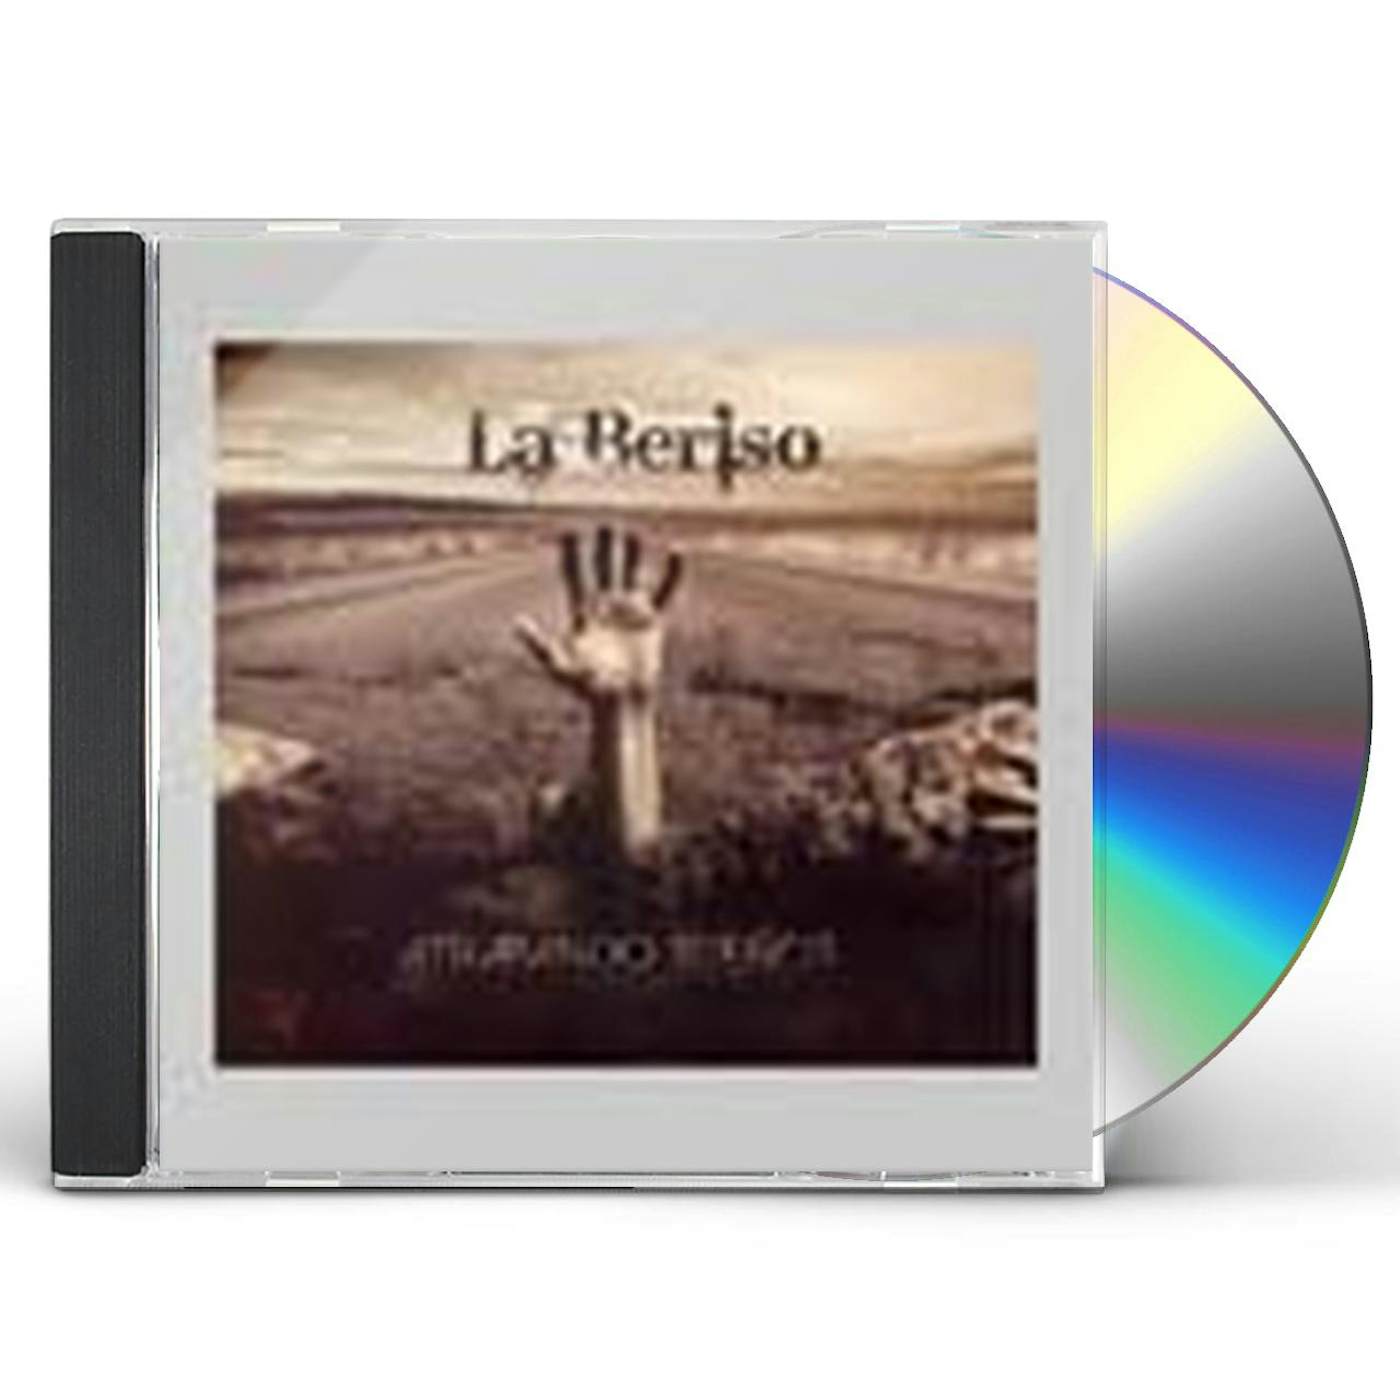 La Beriso ATRAPANDO SUENOS CD